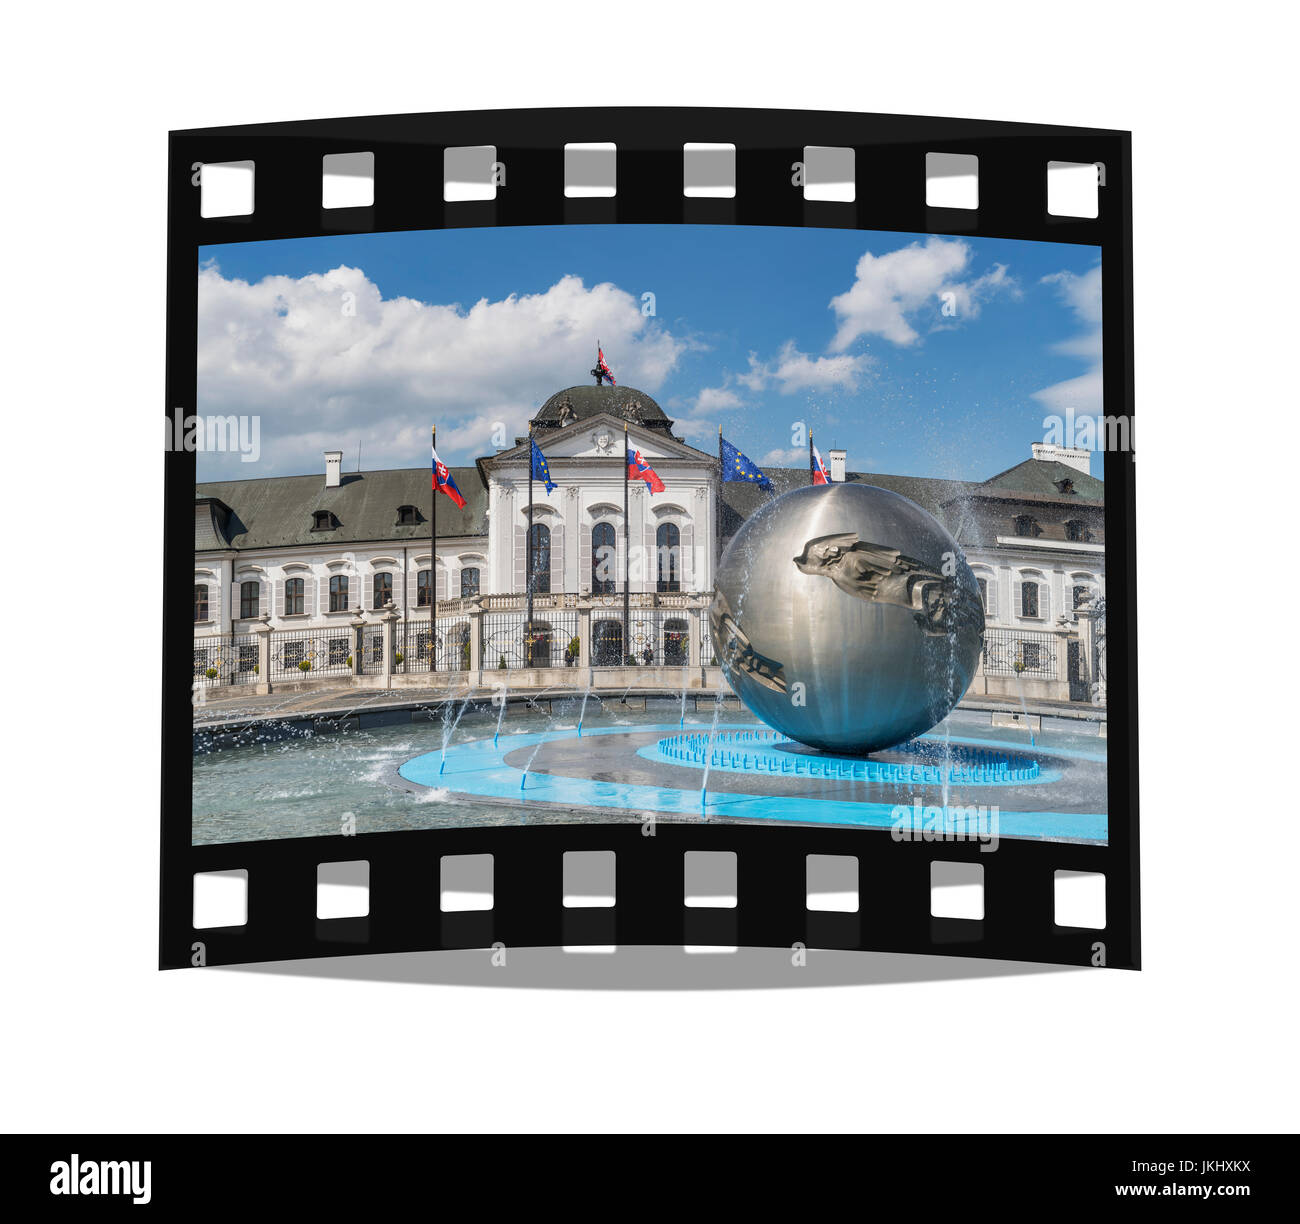 Palais Grassalkovich ist ein beeindruckend späten Barock Rokoko-Palast. Es ist der Sitz des Präsidenten der Slowakei, Bratislava, Slowakei, Europa Stockfoto